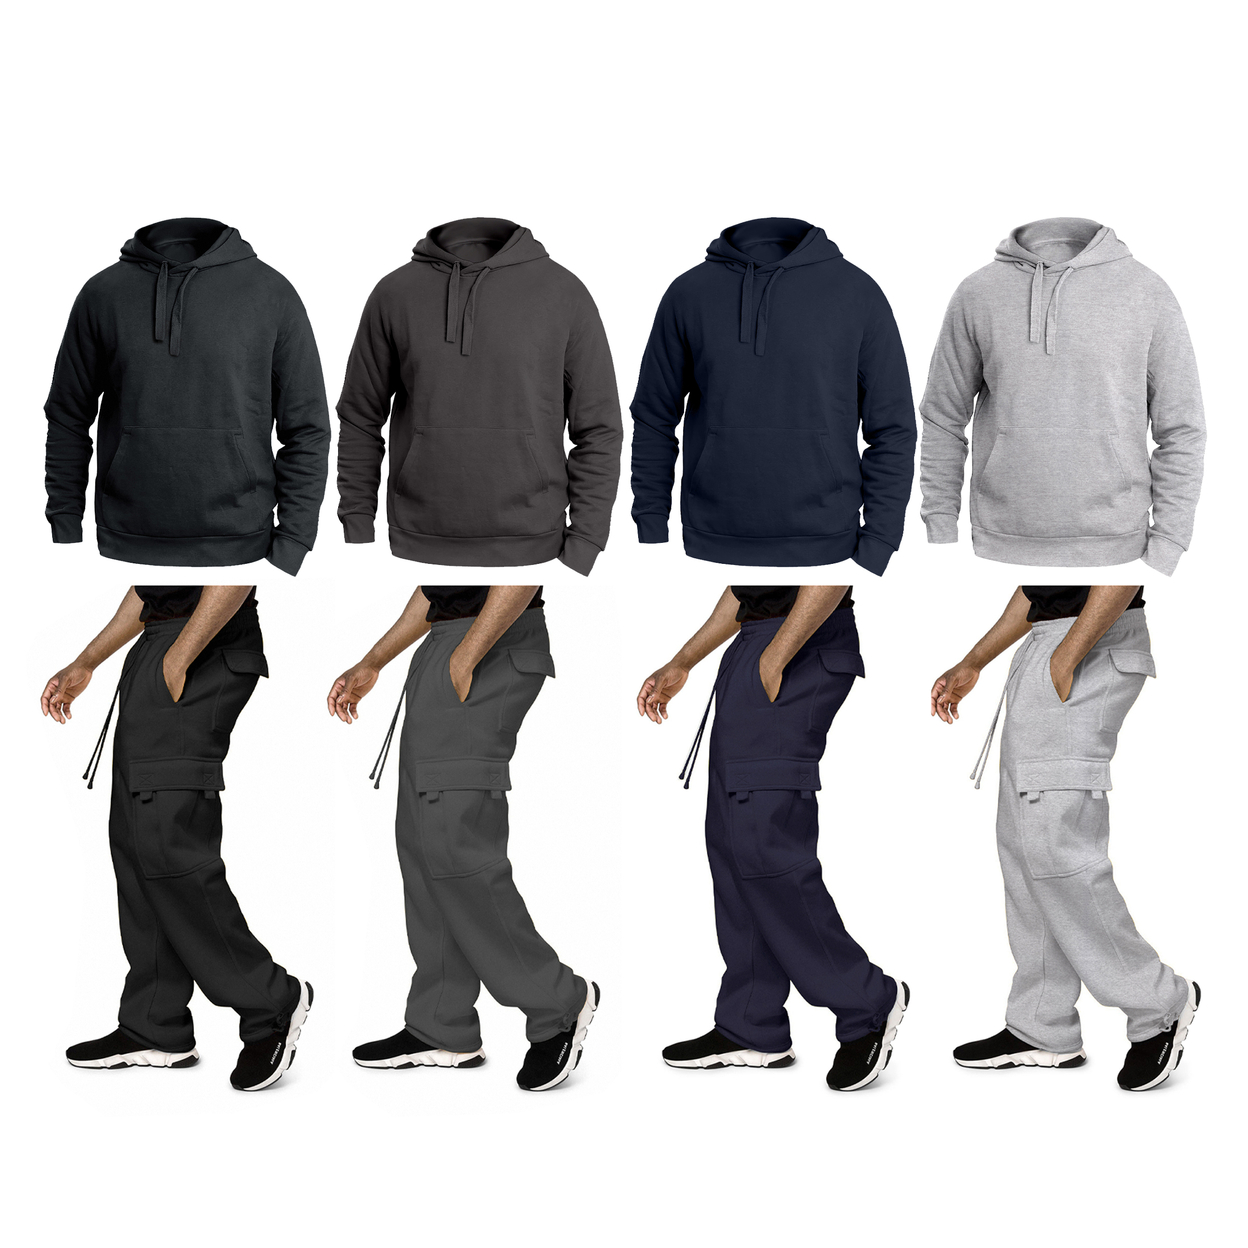 Multi-Pack: Big & Tall Men's Winter Warm Cozy Athletic Fleece Lined Multi-Pocket Cargo Sweatsuit - Grey, 1-pack, X-large